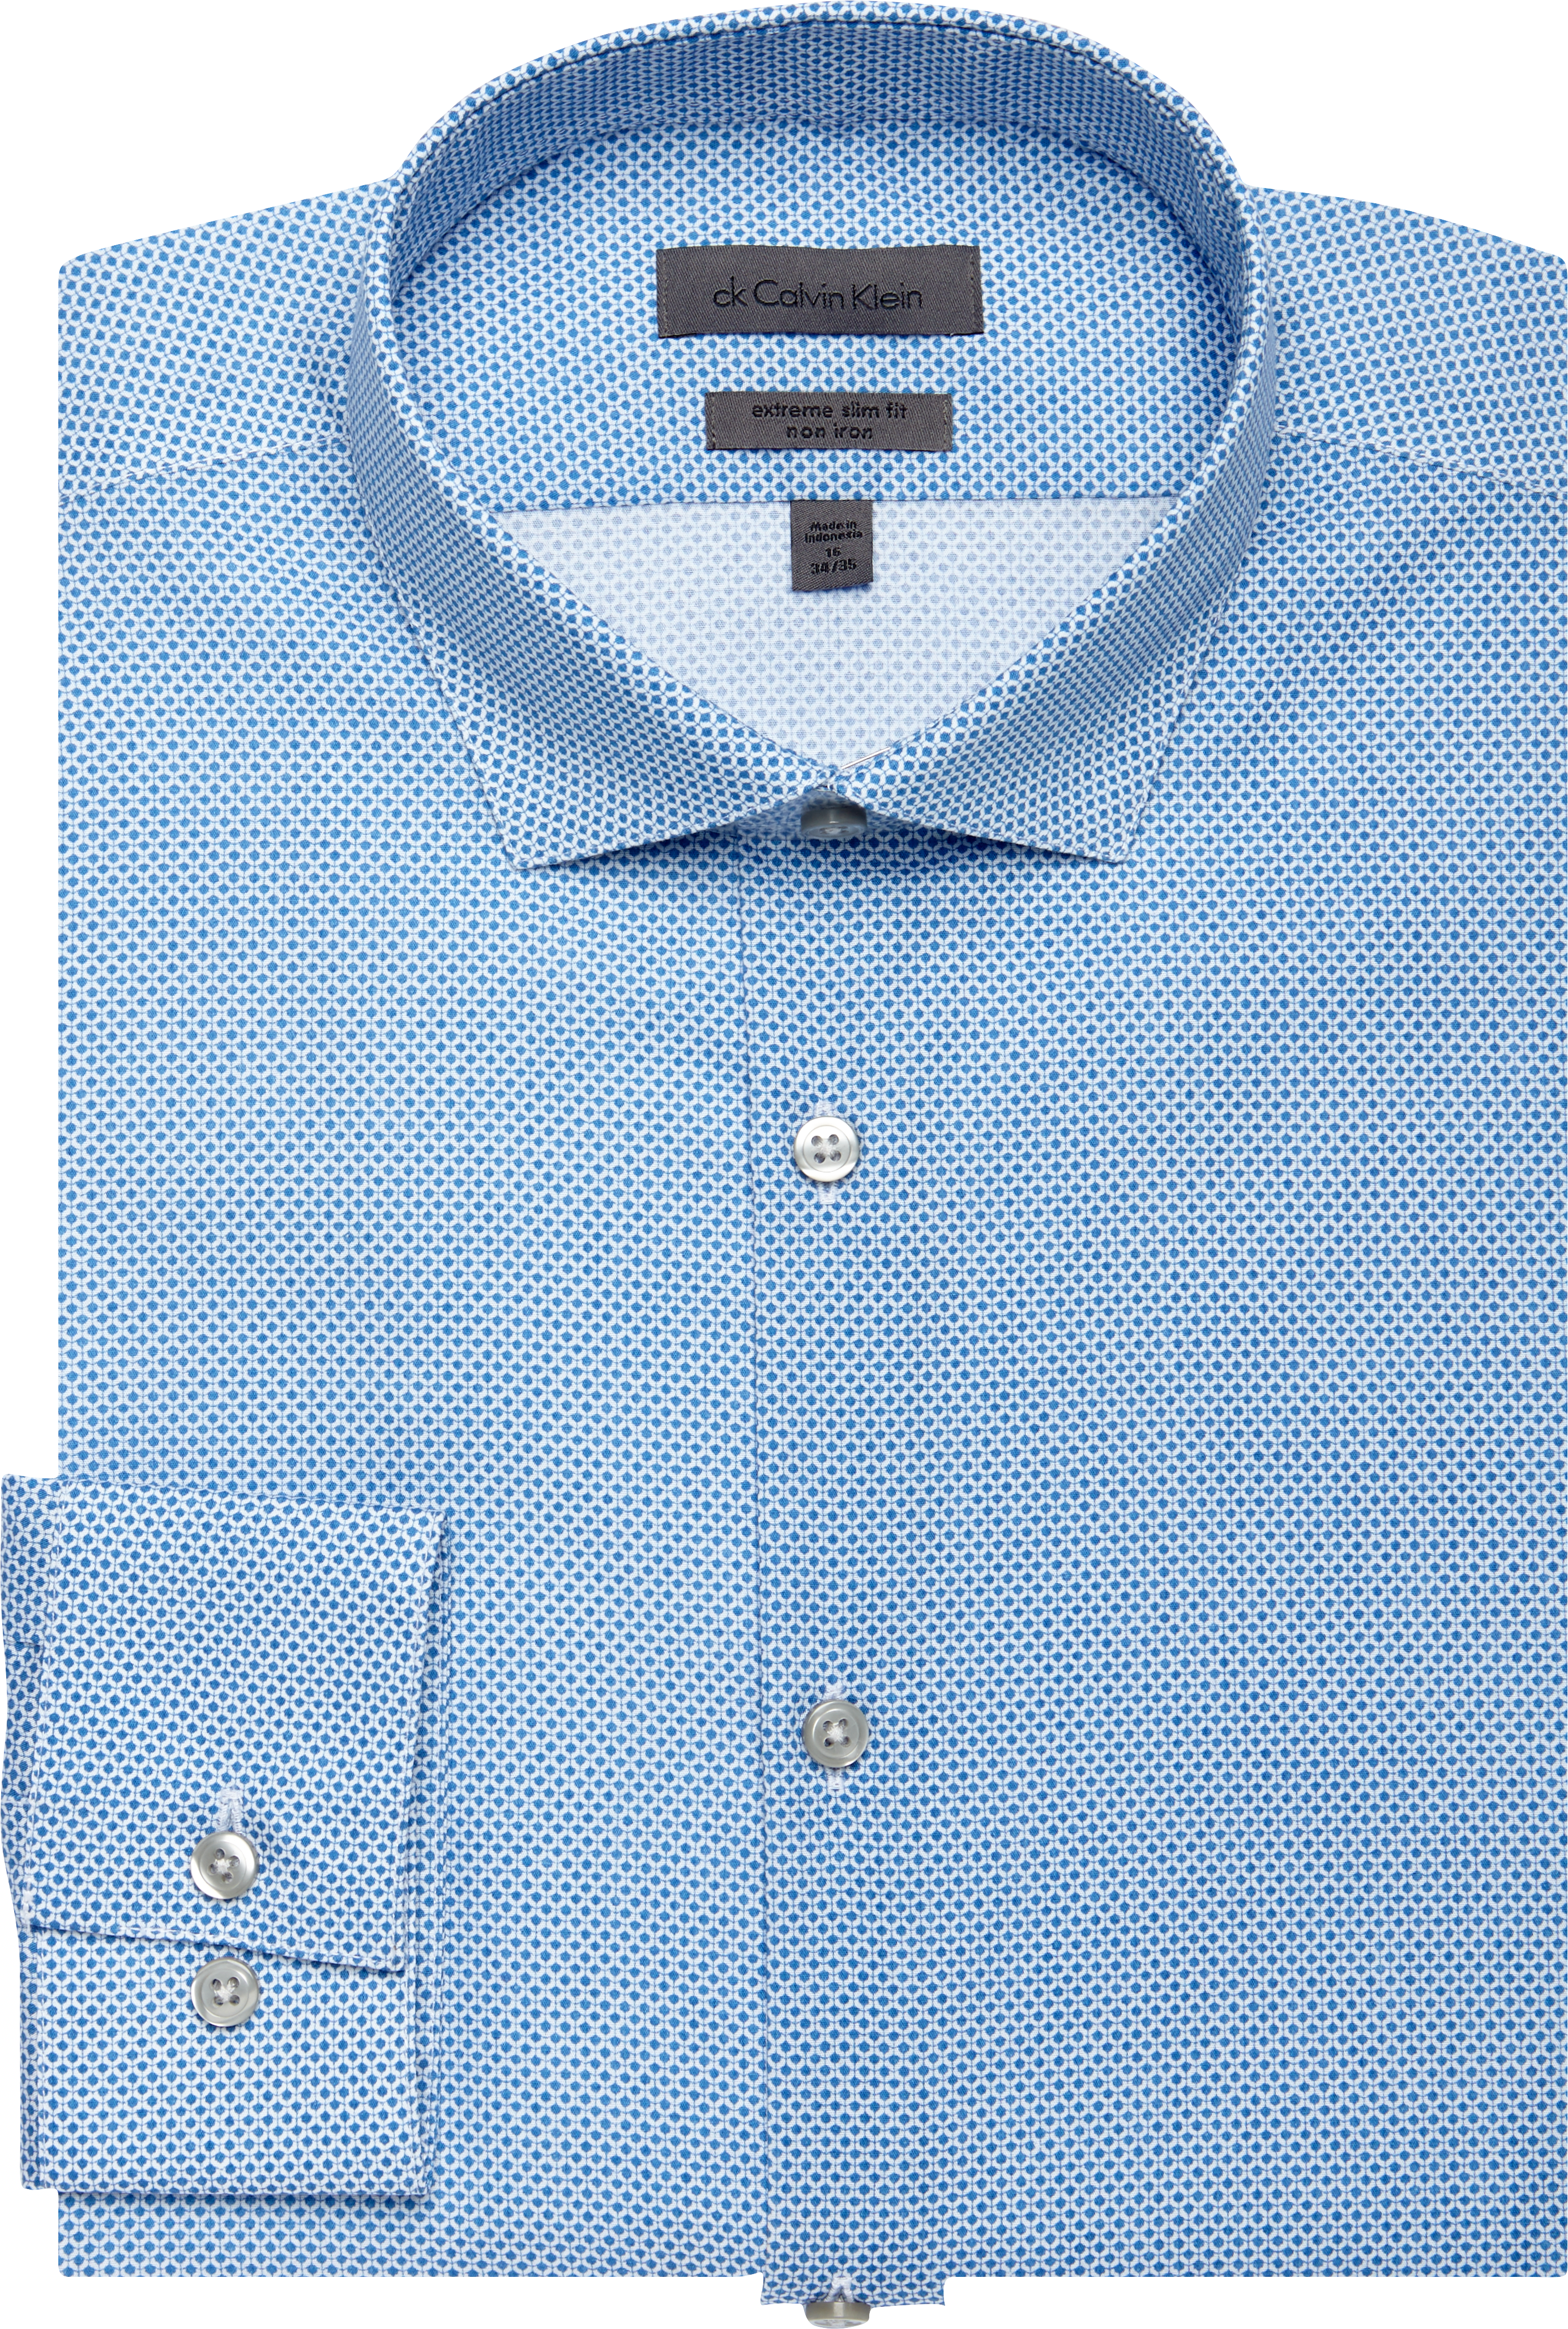 Calvin Klein Blue Extreme Slim Fit Dress Shirt - Men's Shirts | Men's